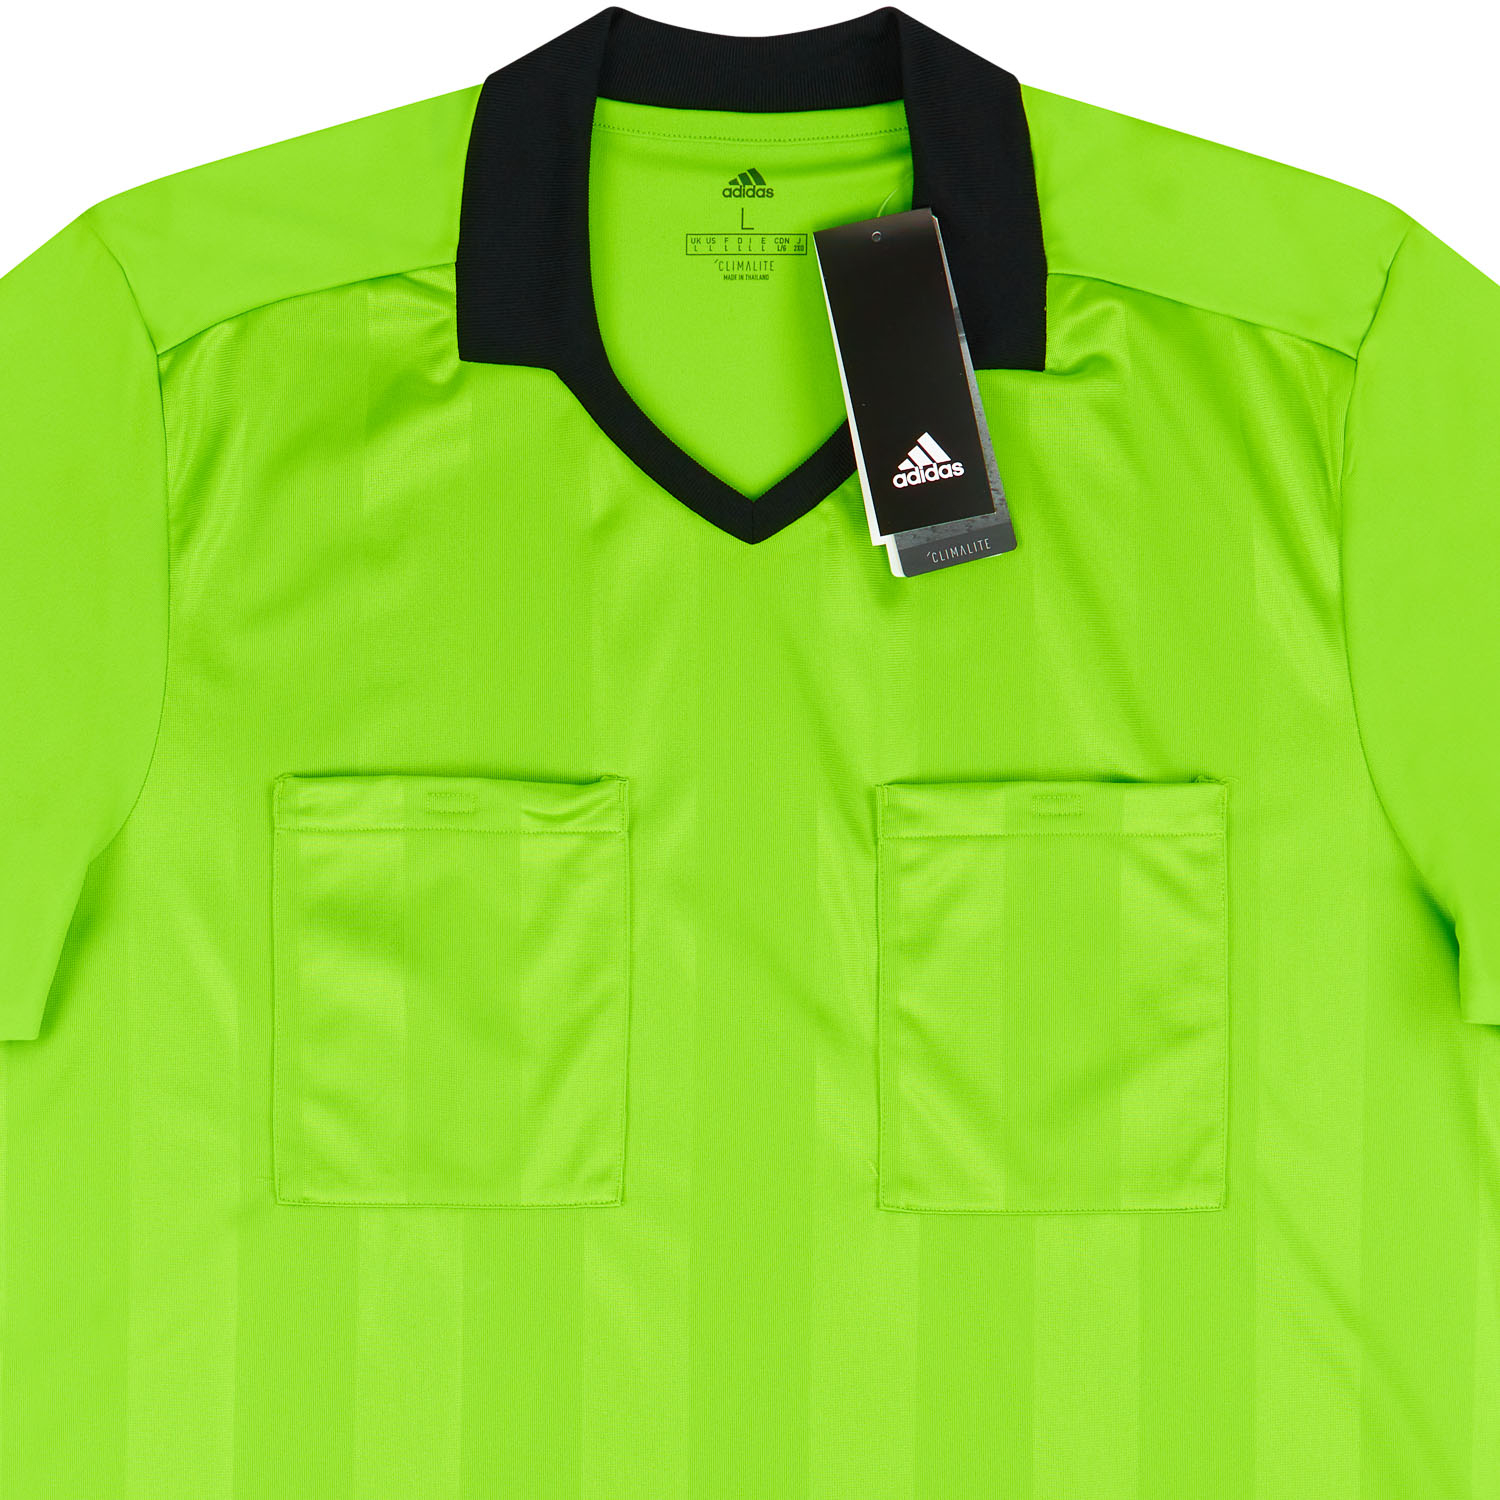 2018-19 adidas Referee Shirt - NEW